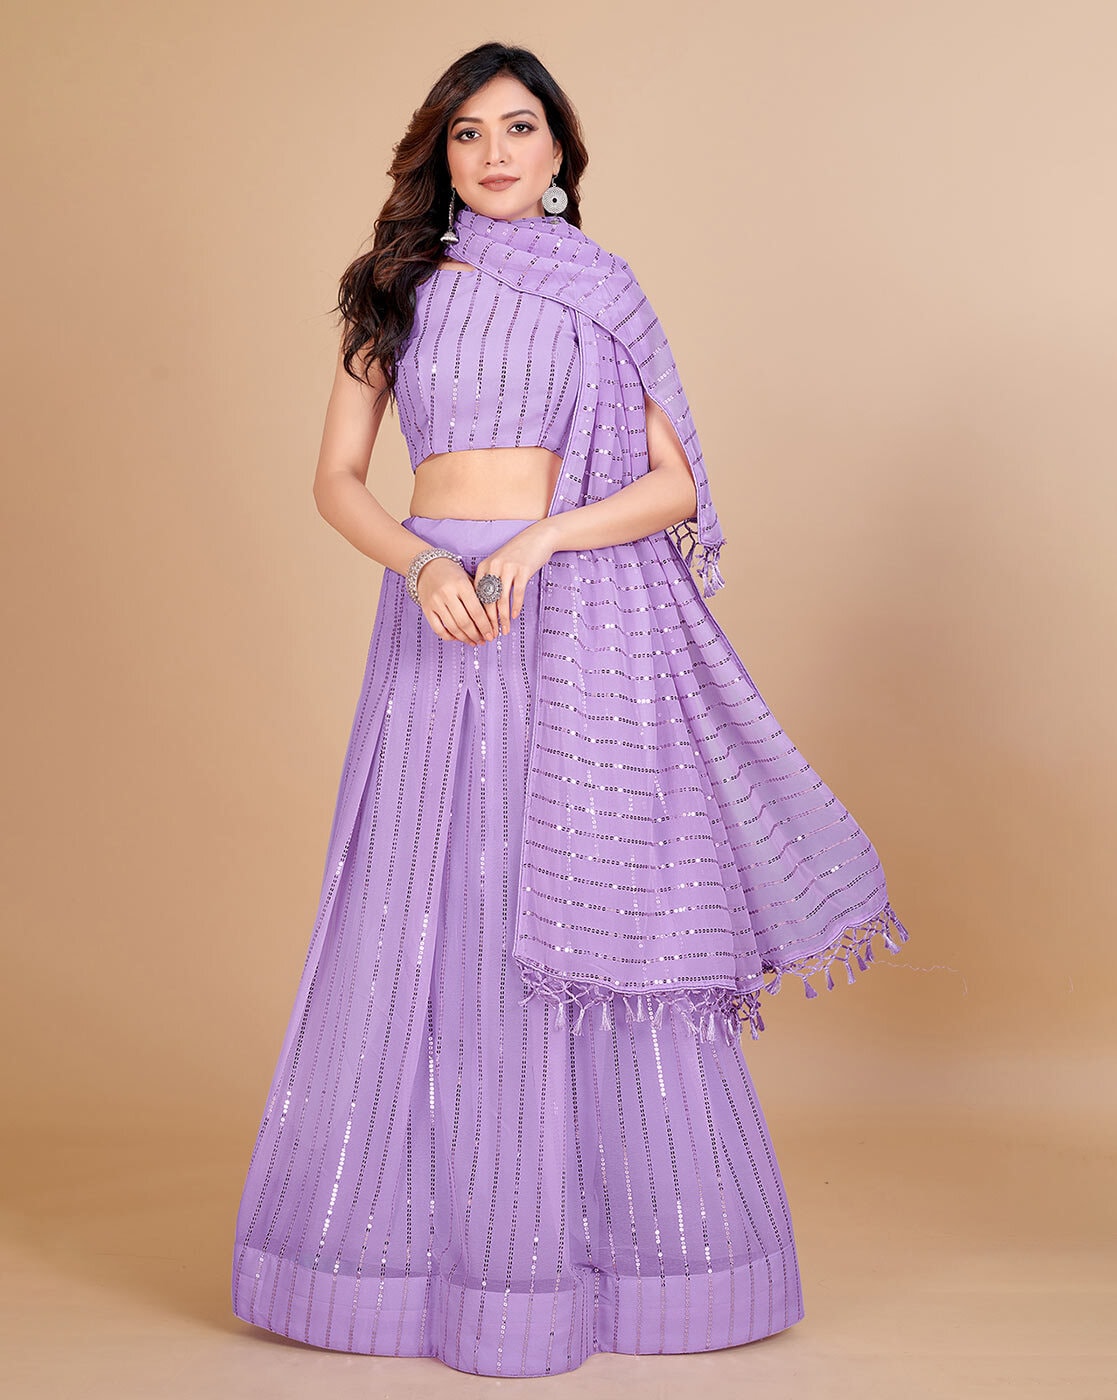 New Bridal Collection Silk Lehenga Choli For Girls In Magenta Pink Colored  at Rs 3999, Wedding Lehenga in Surat